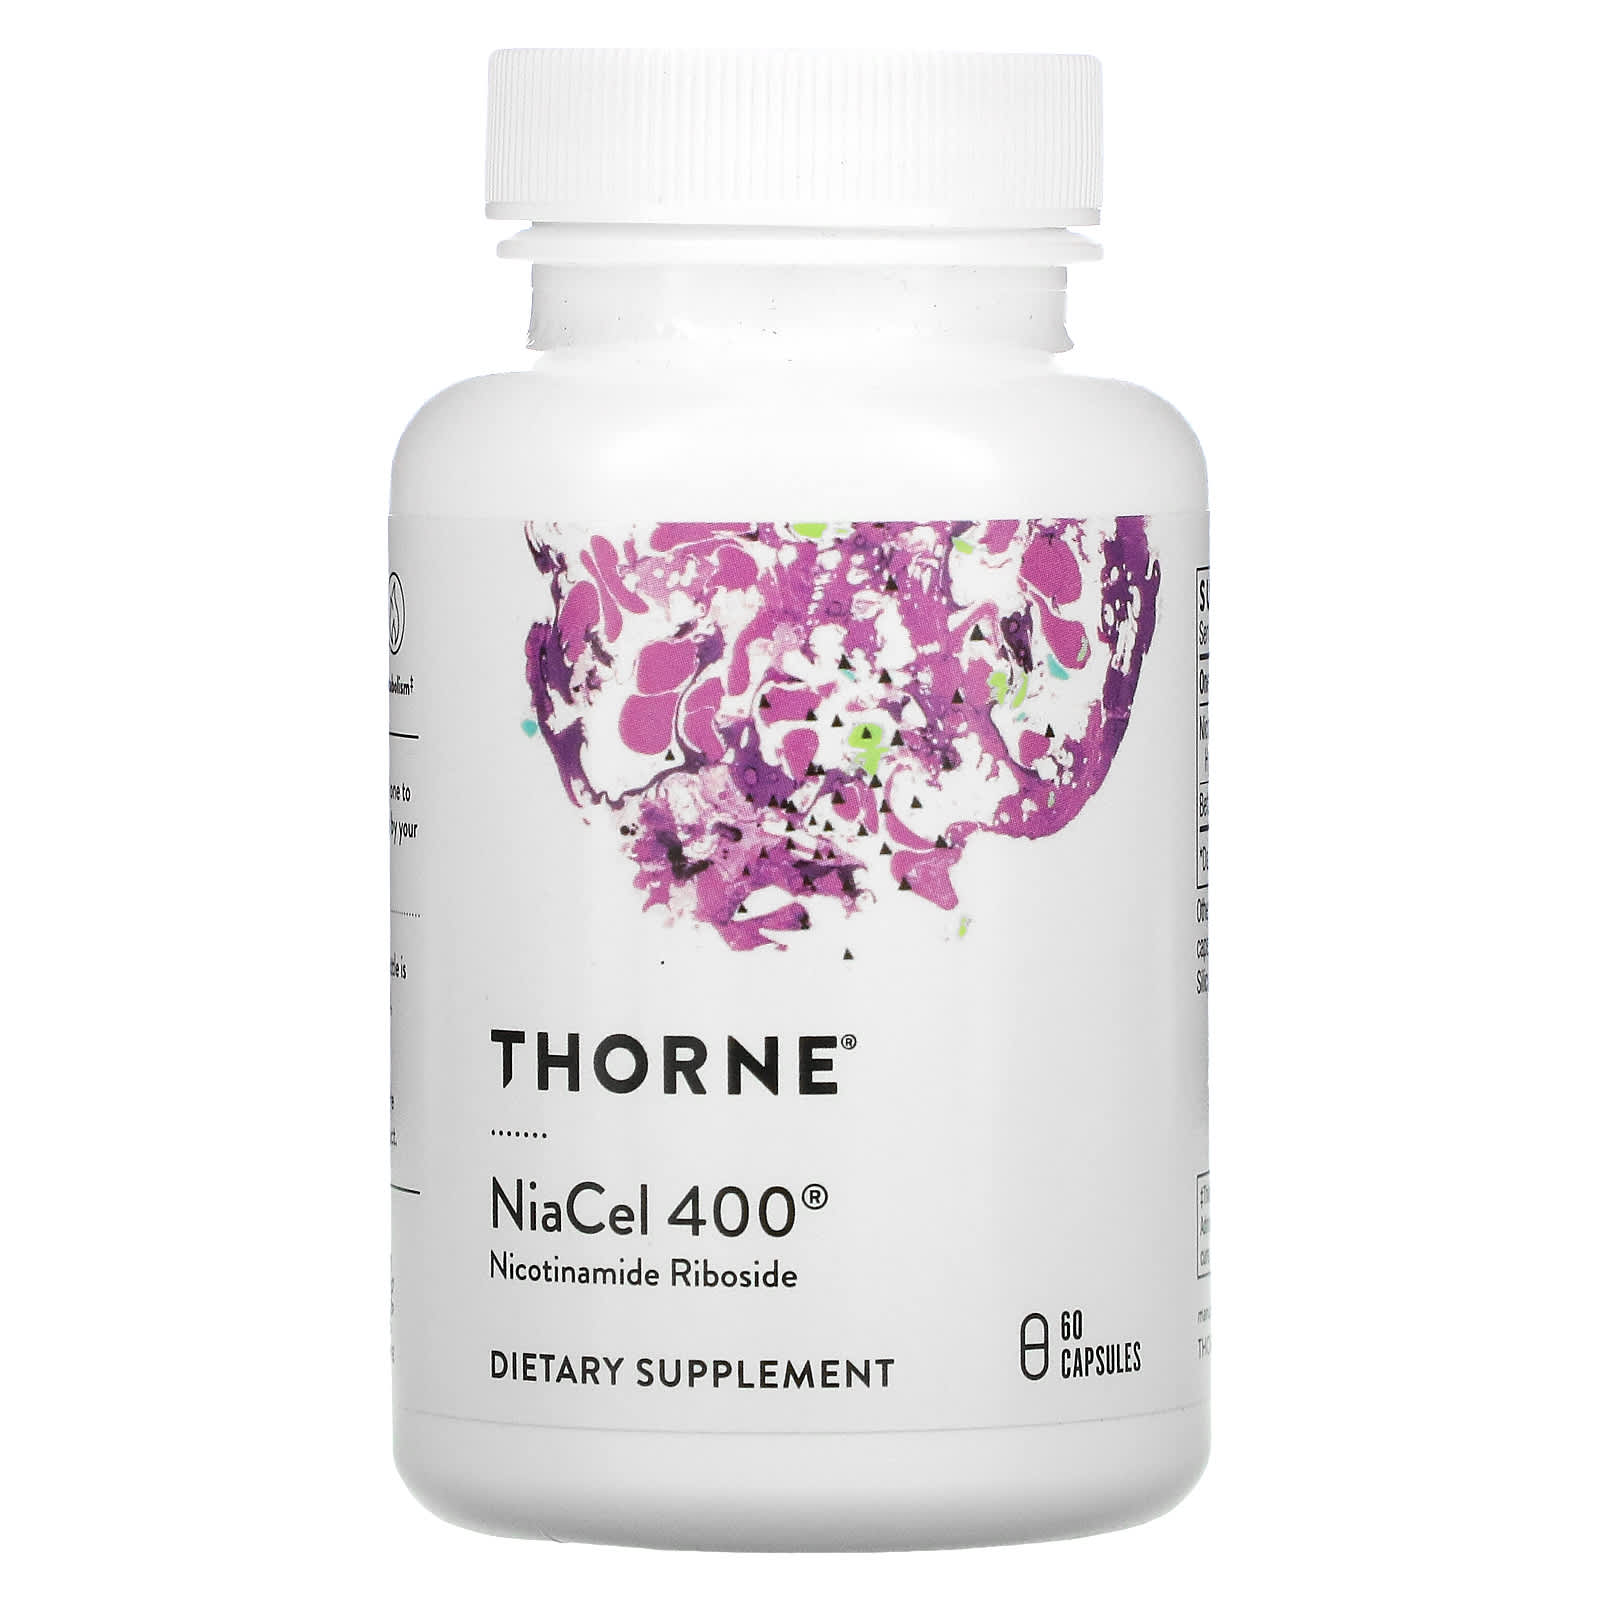 Пищевая Добавка Thorne NiaCel 400, 60 капсул